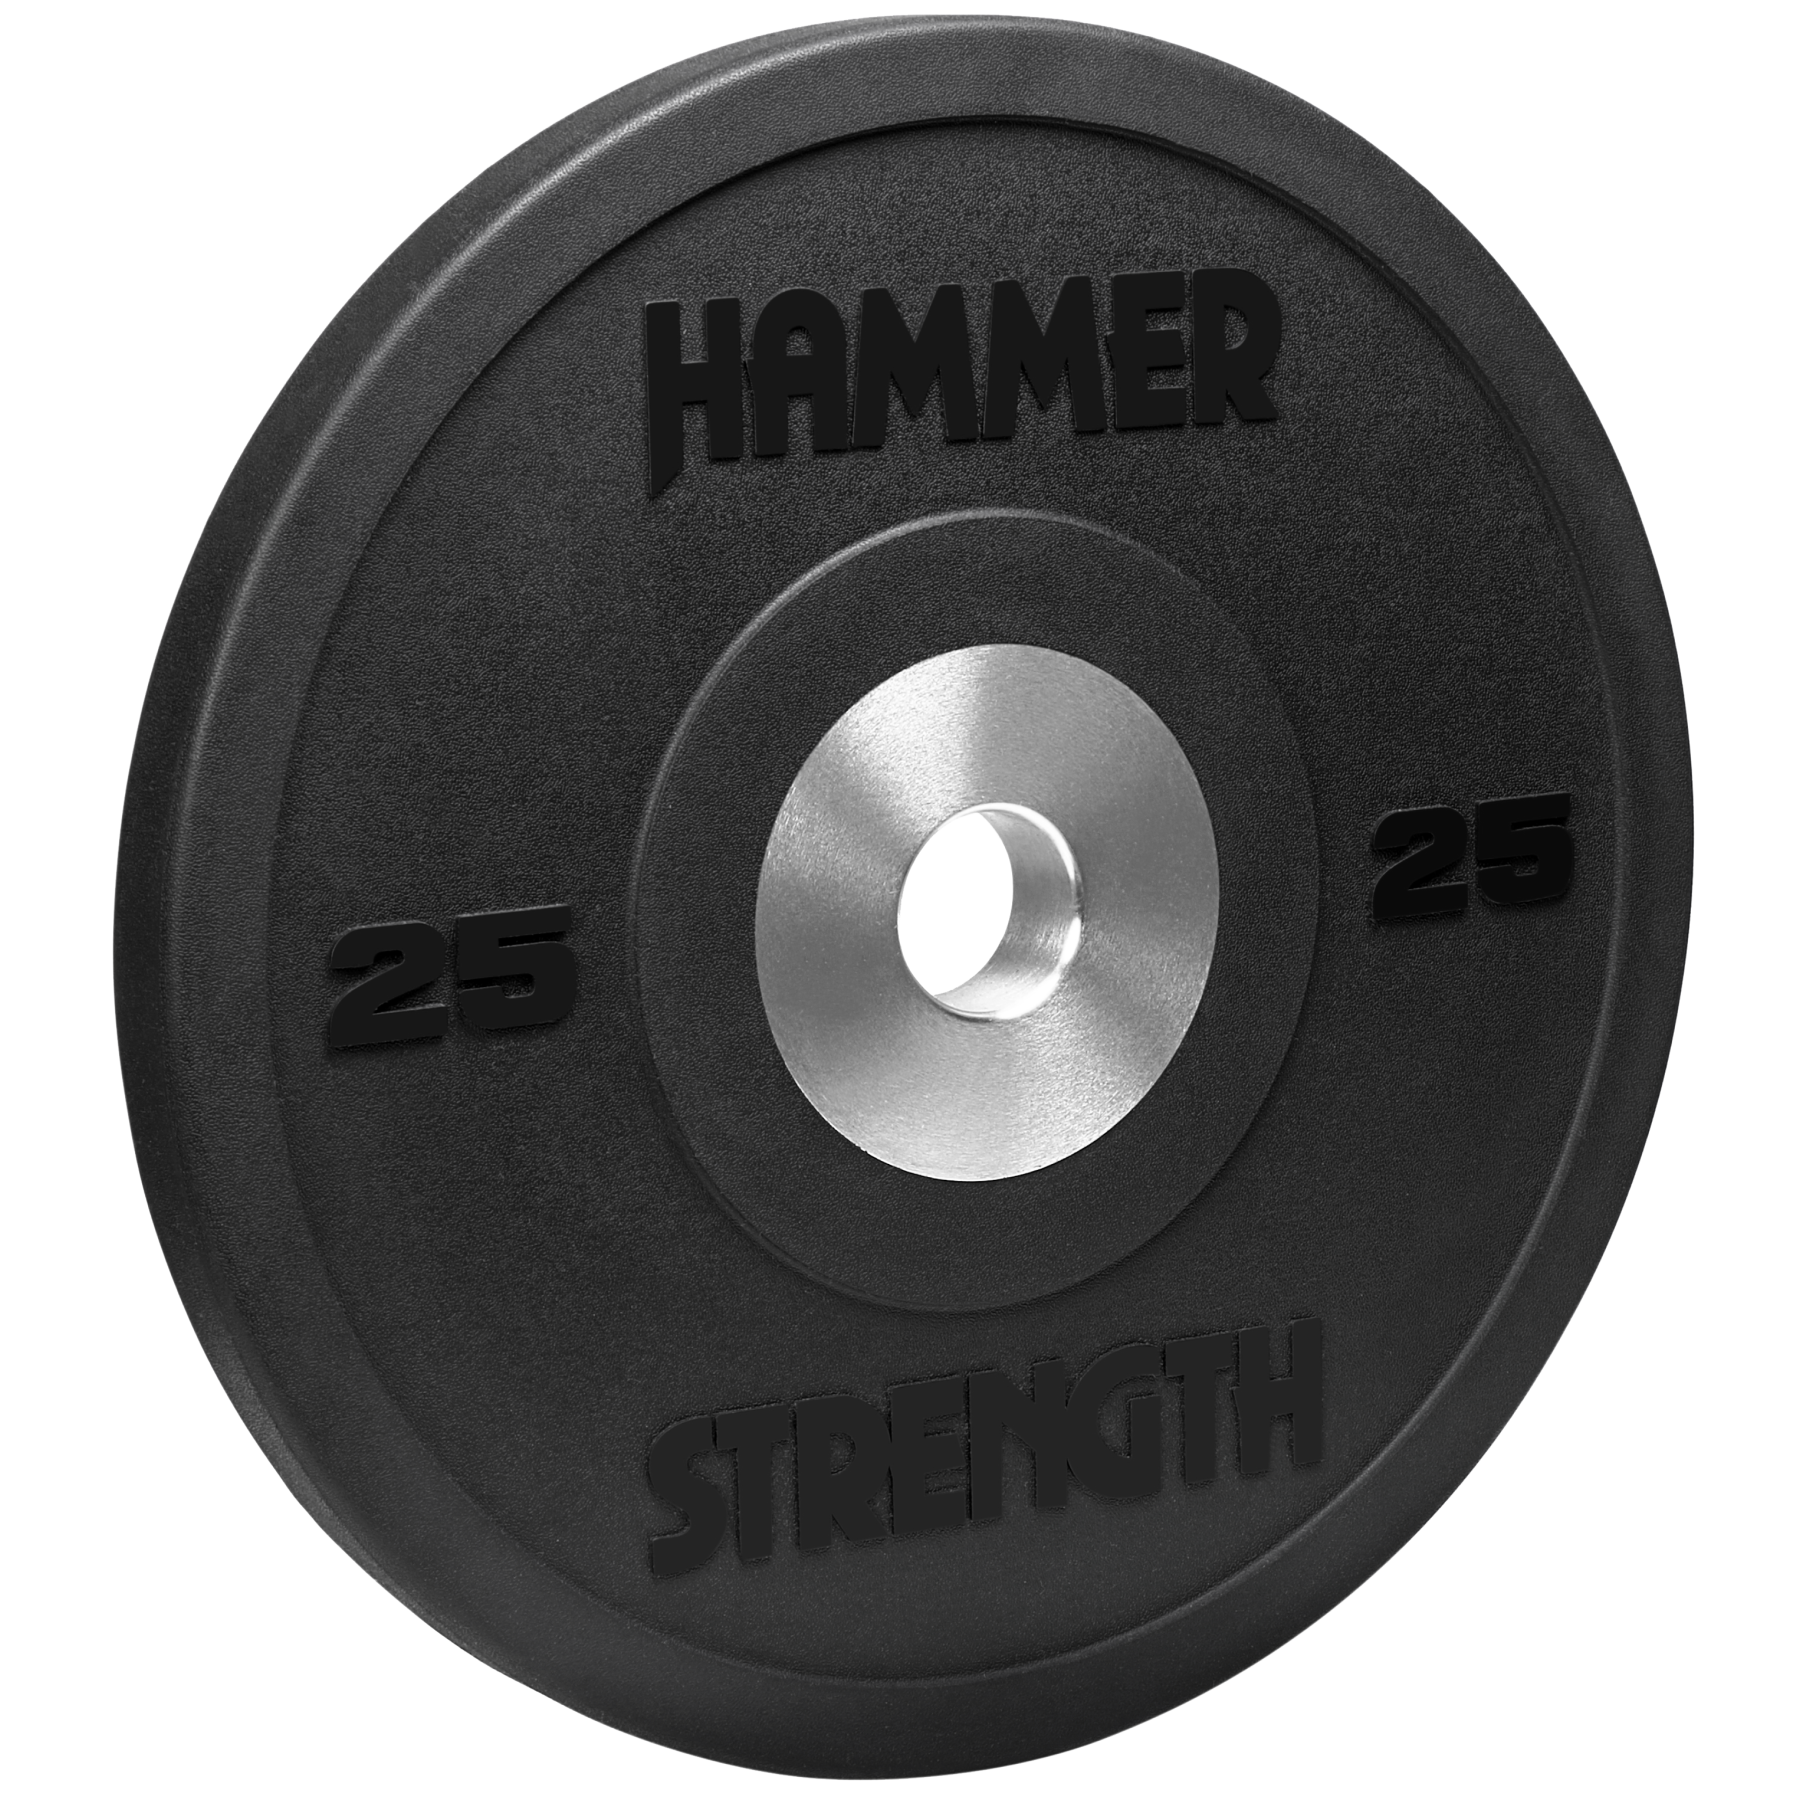 Hammer Strength, Hammer Strength Premium Rubber Black Bumpers